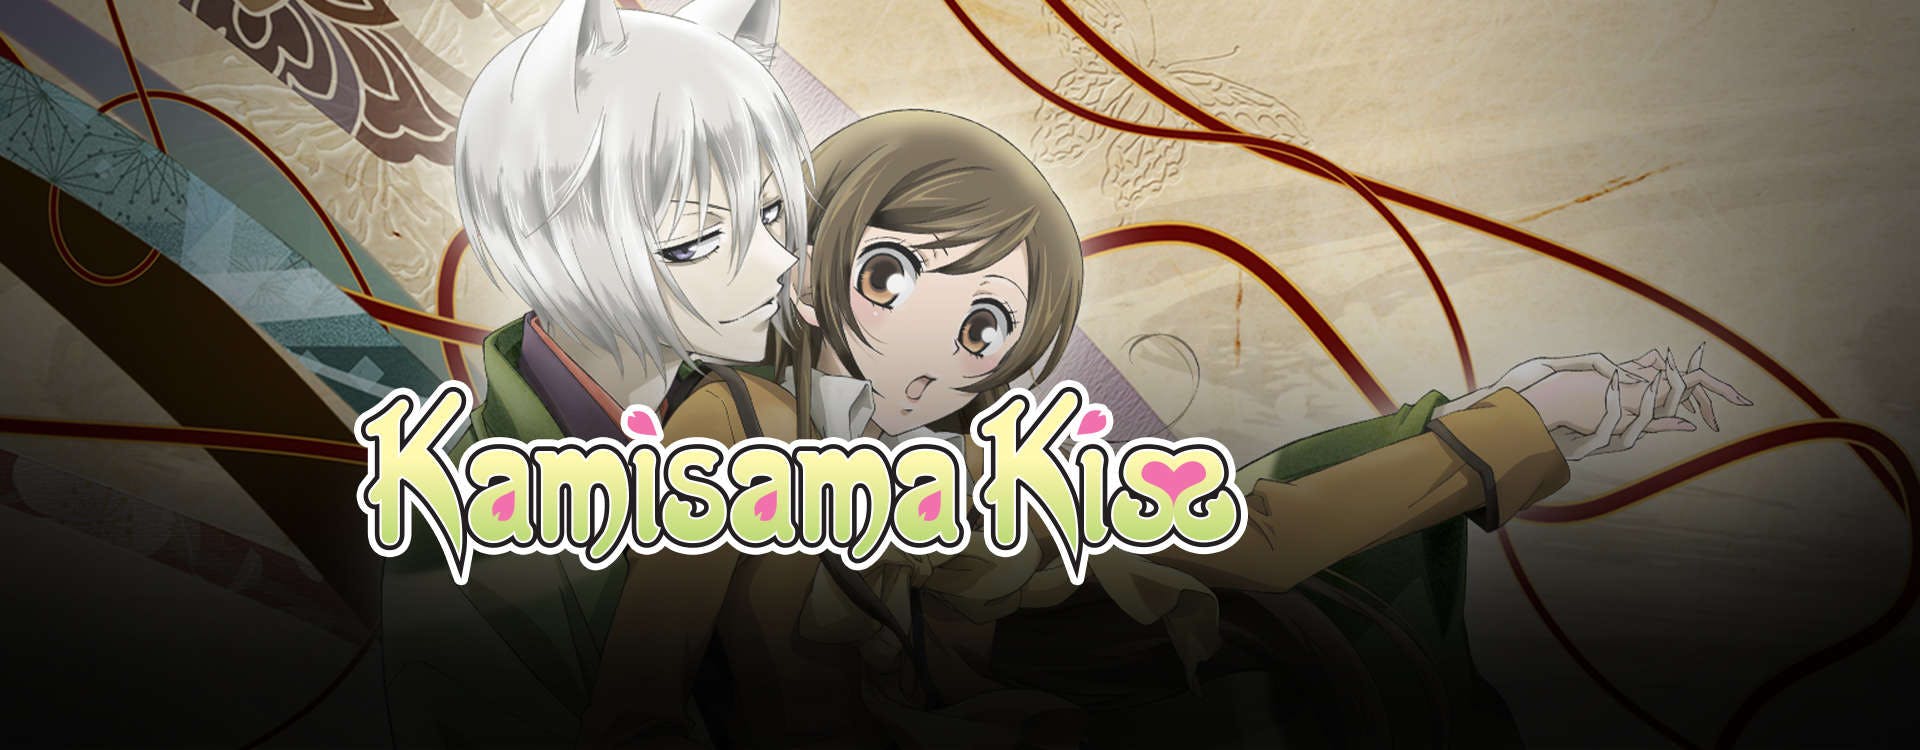 best romance anime : Kamisama Kiss